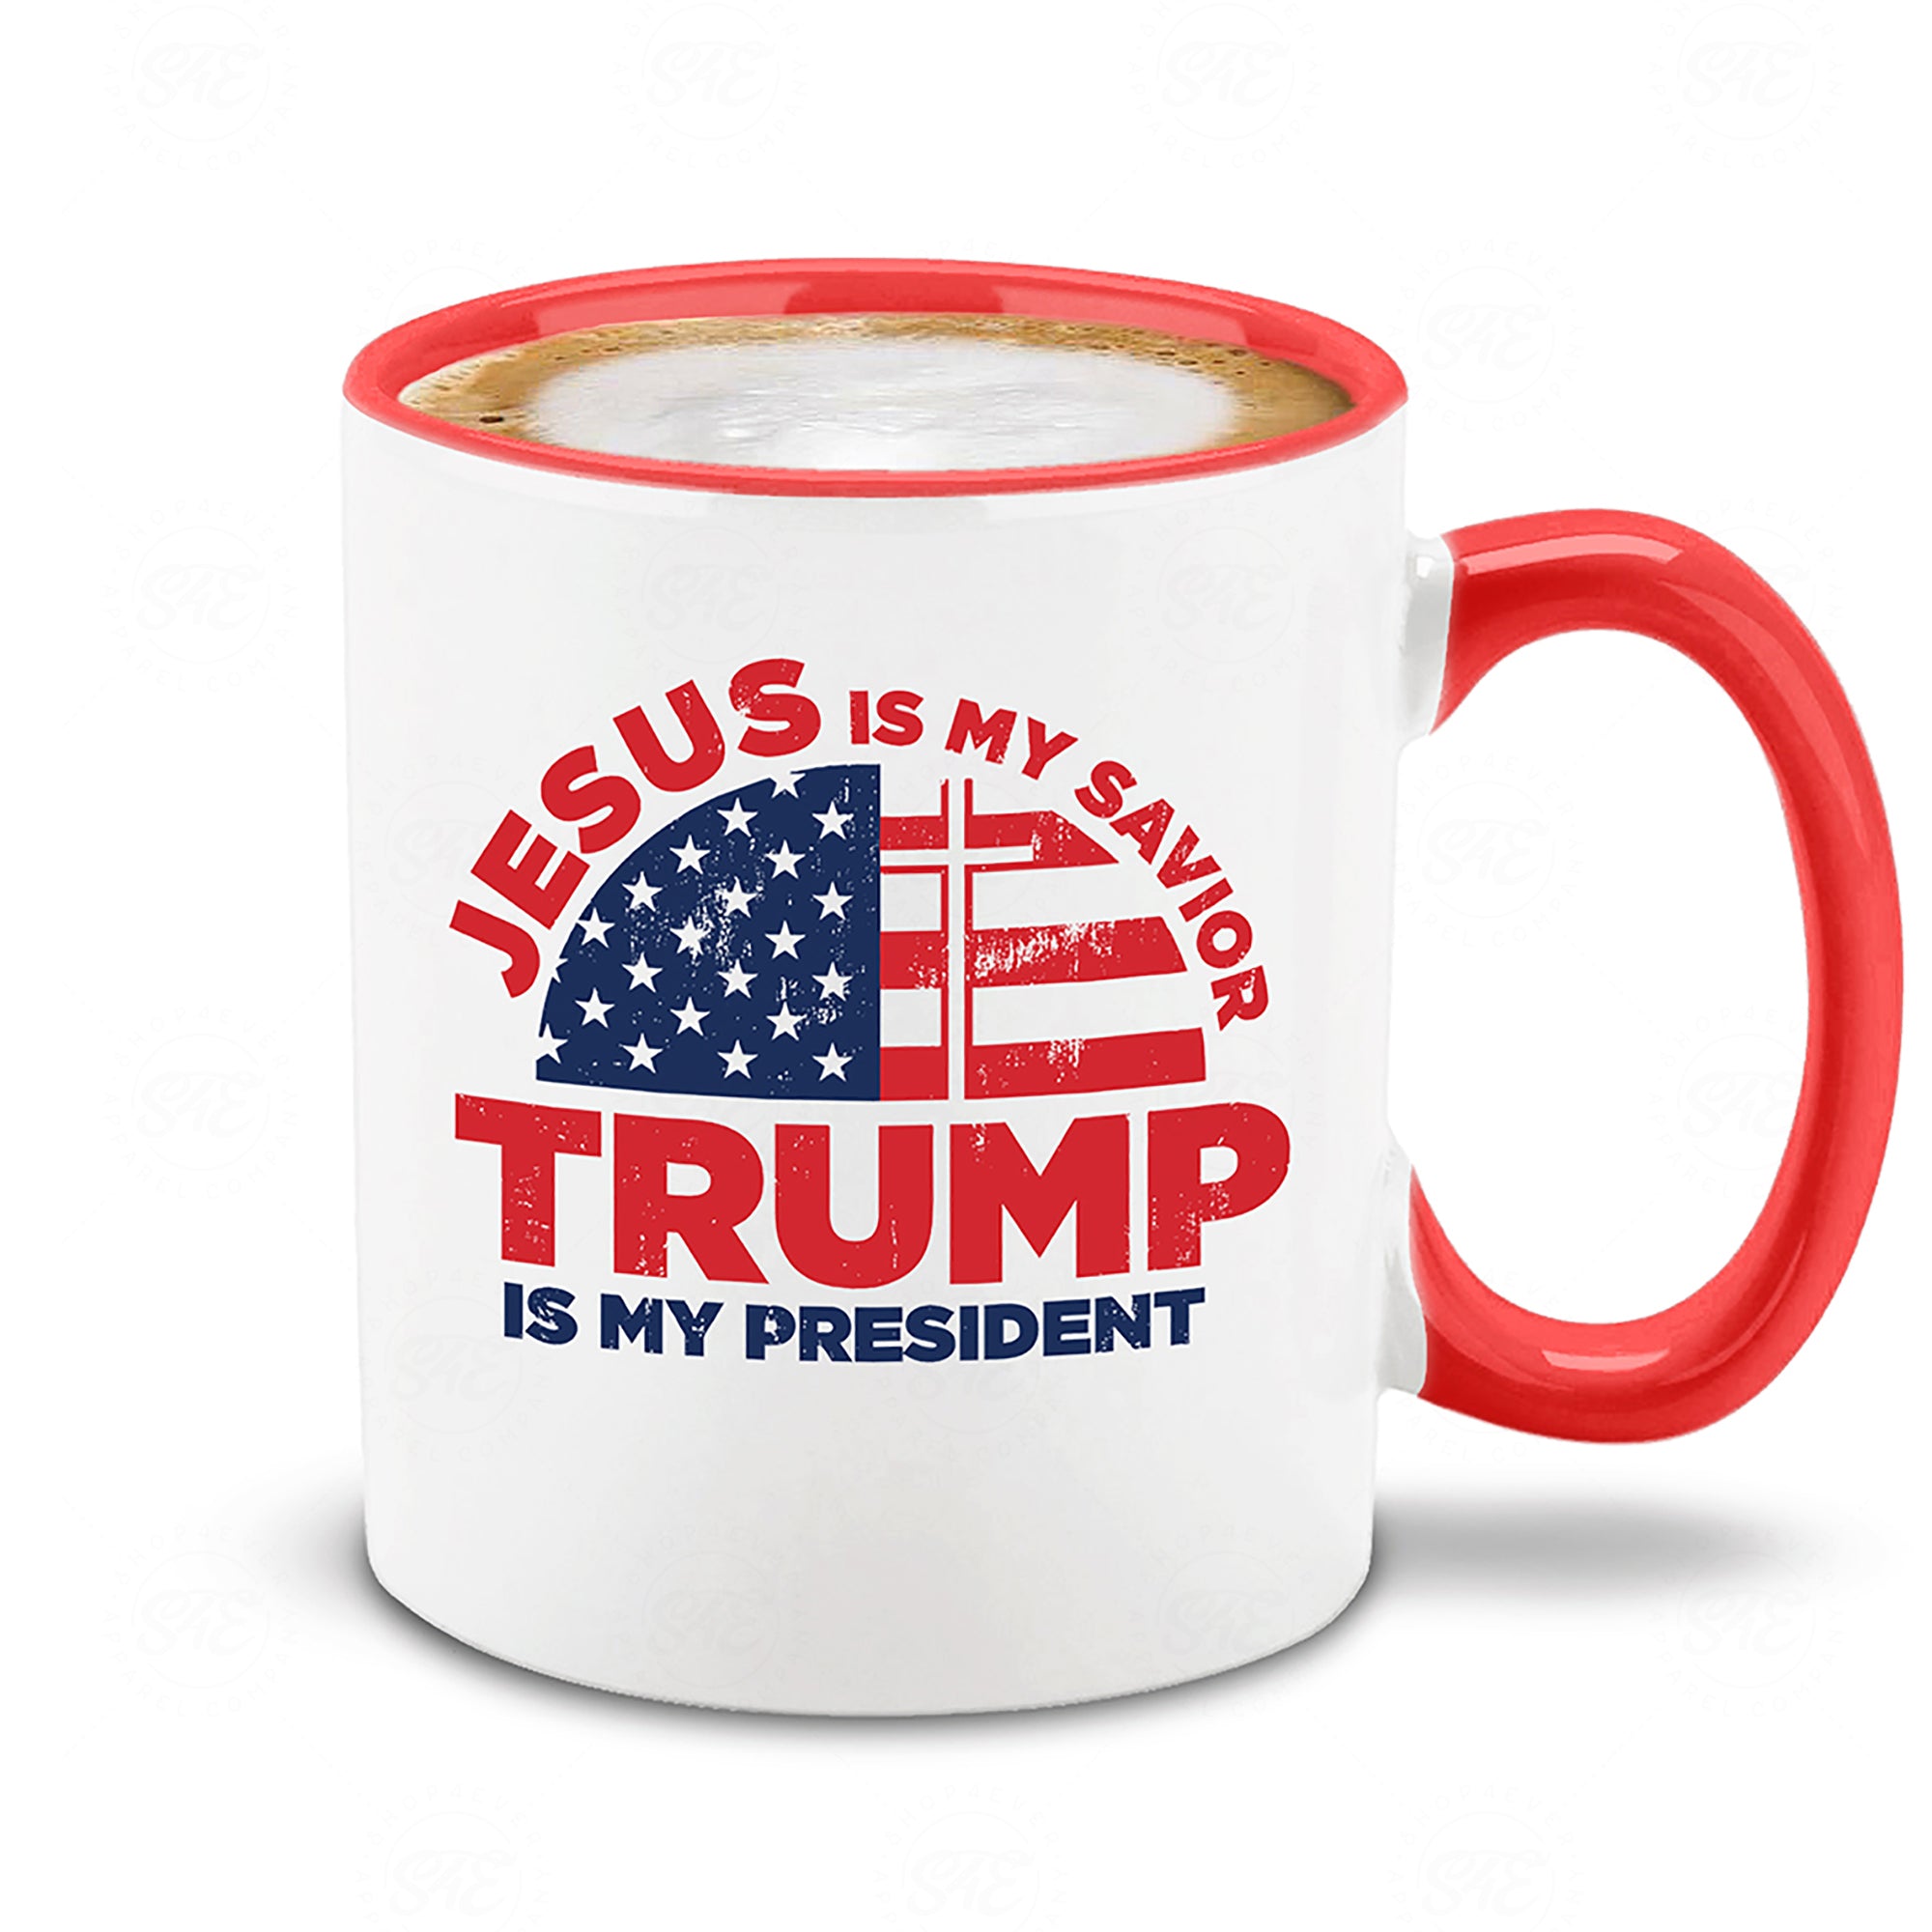 Jesus Is My Savior Trump Is My President Red Handle Ceramic Coffee Mug Tea Cup Donald Trump Mug